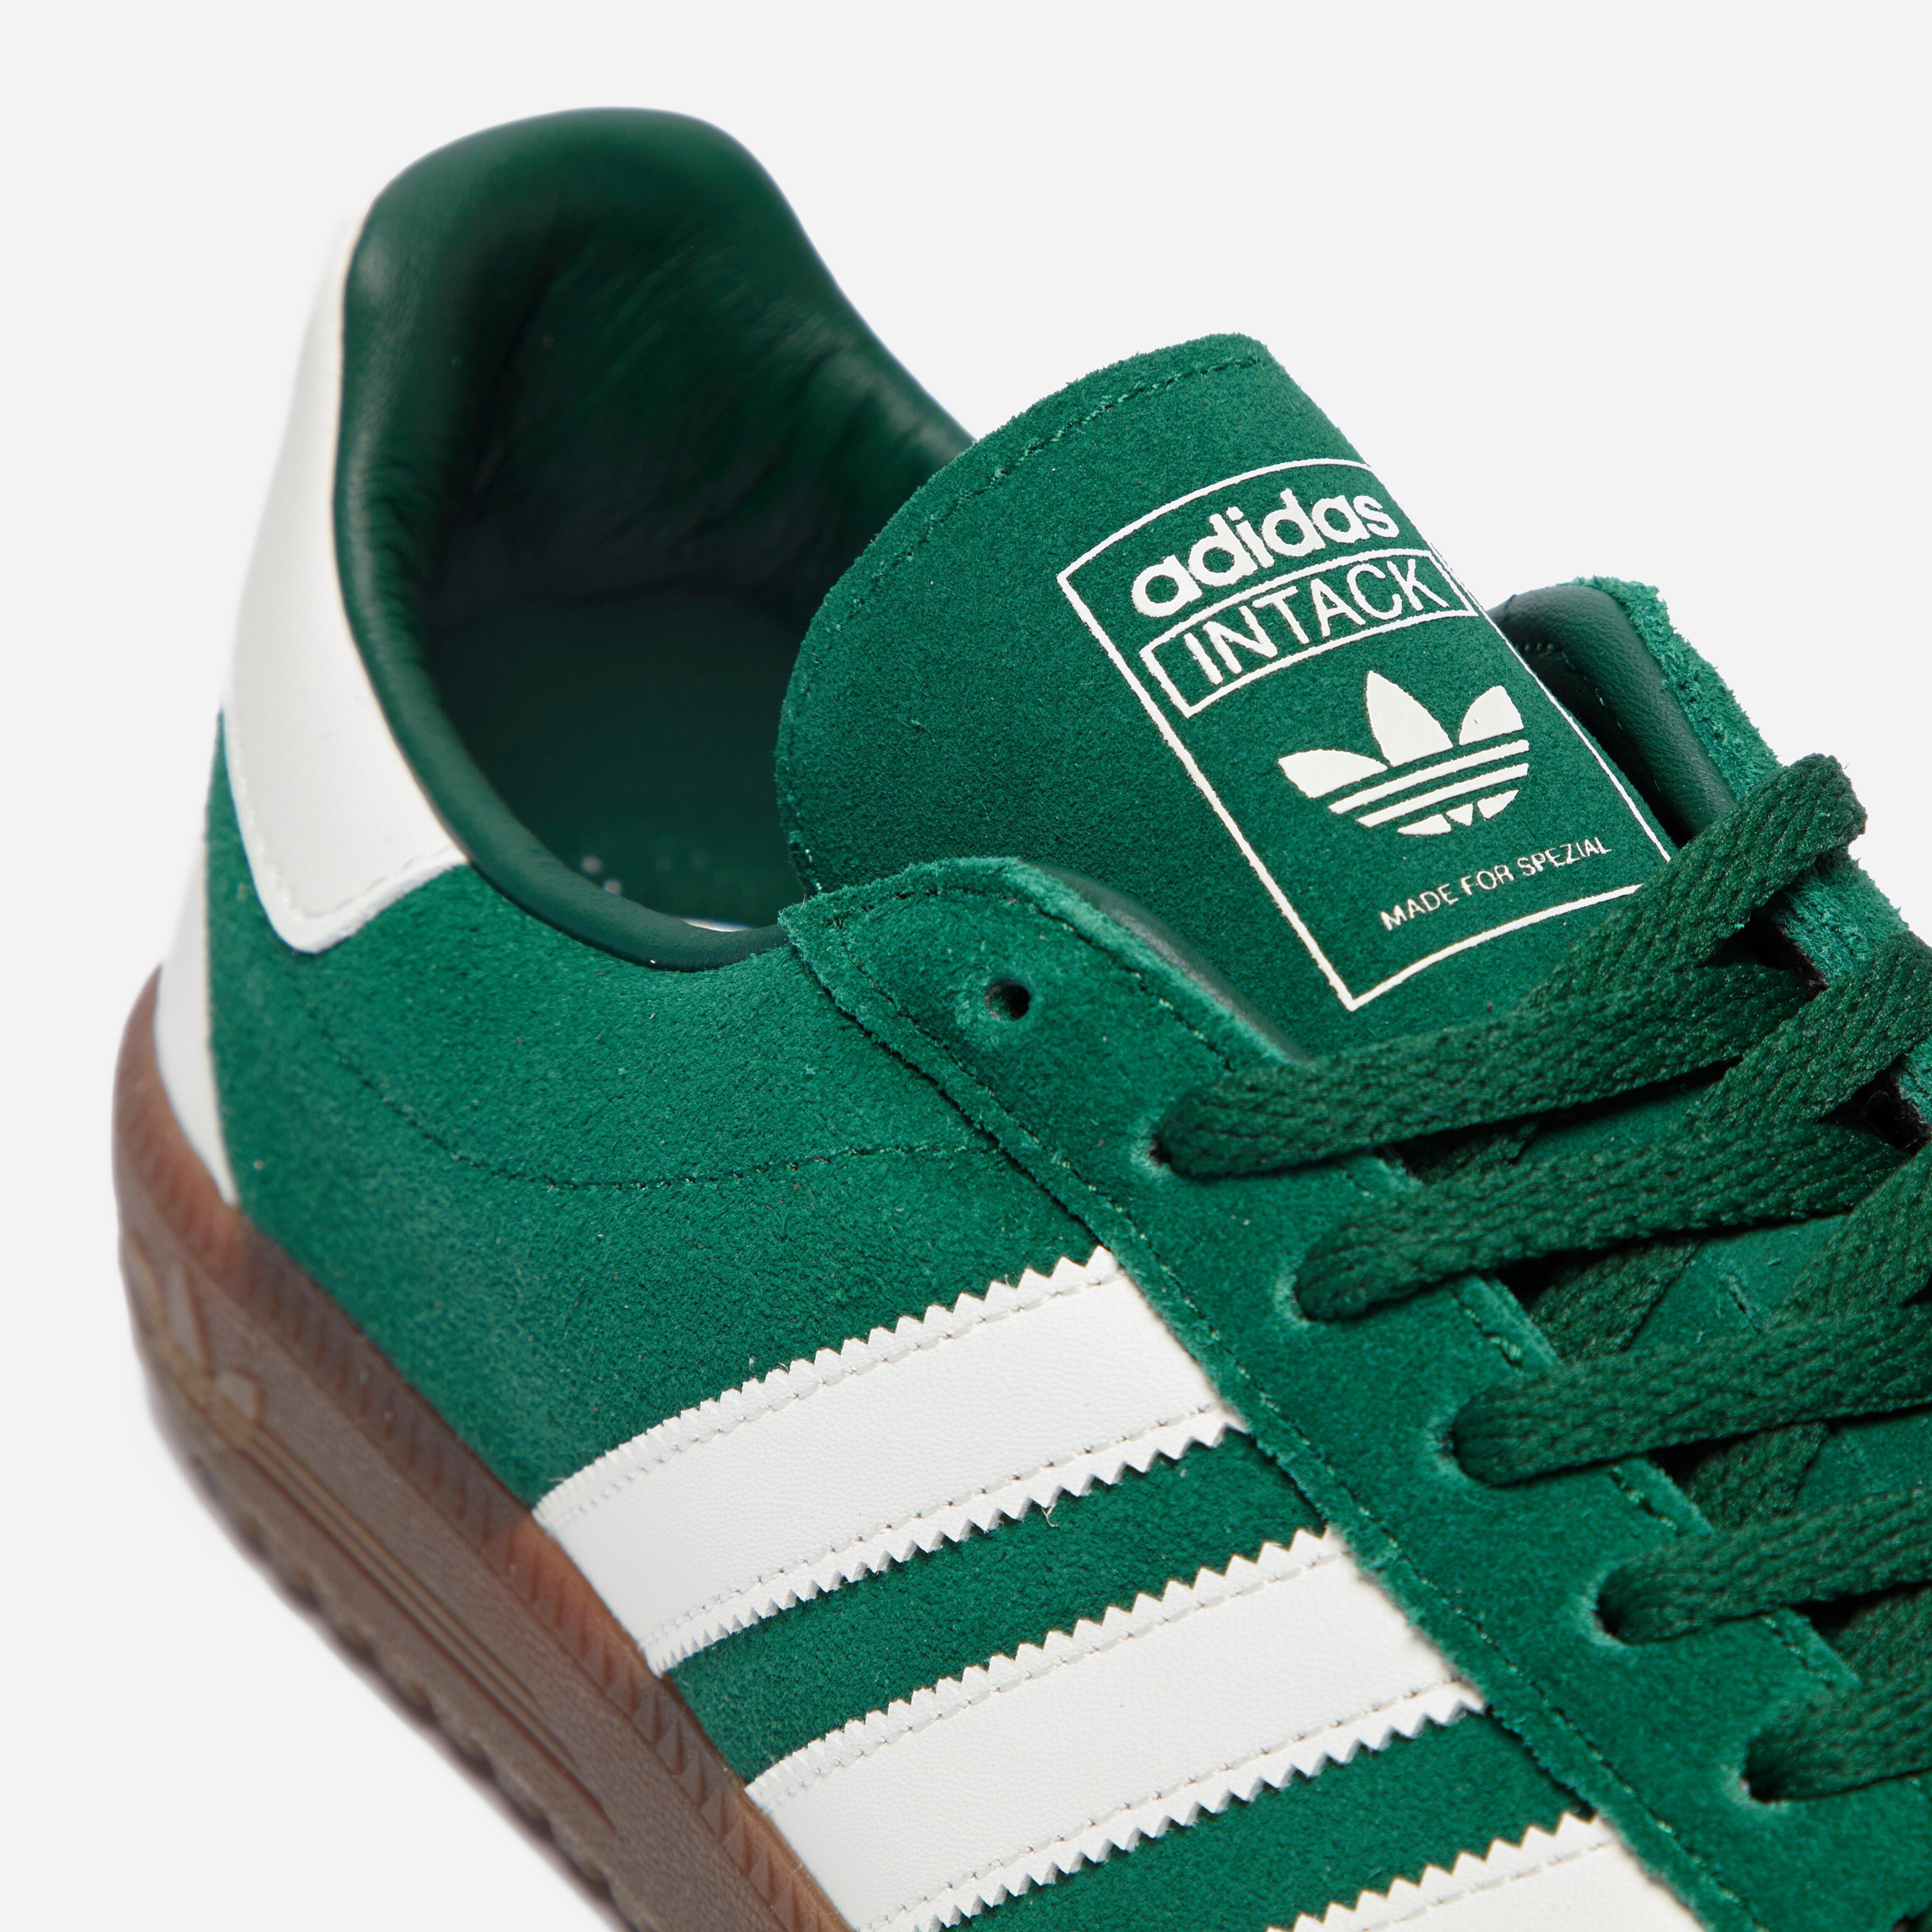 adidas Originals Adidas Originals Intack Spzl in Green for Men - Lyst